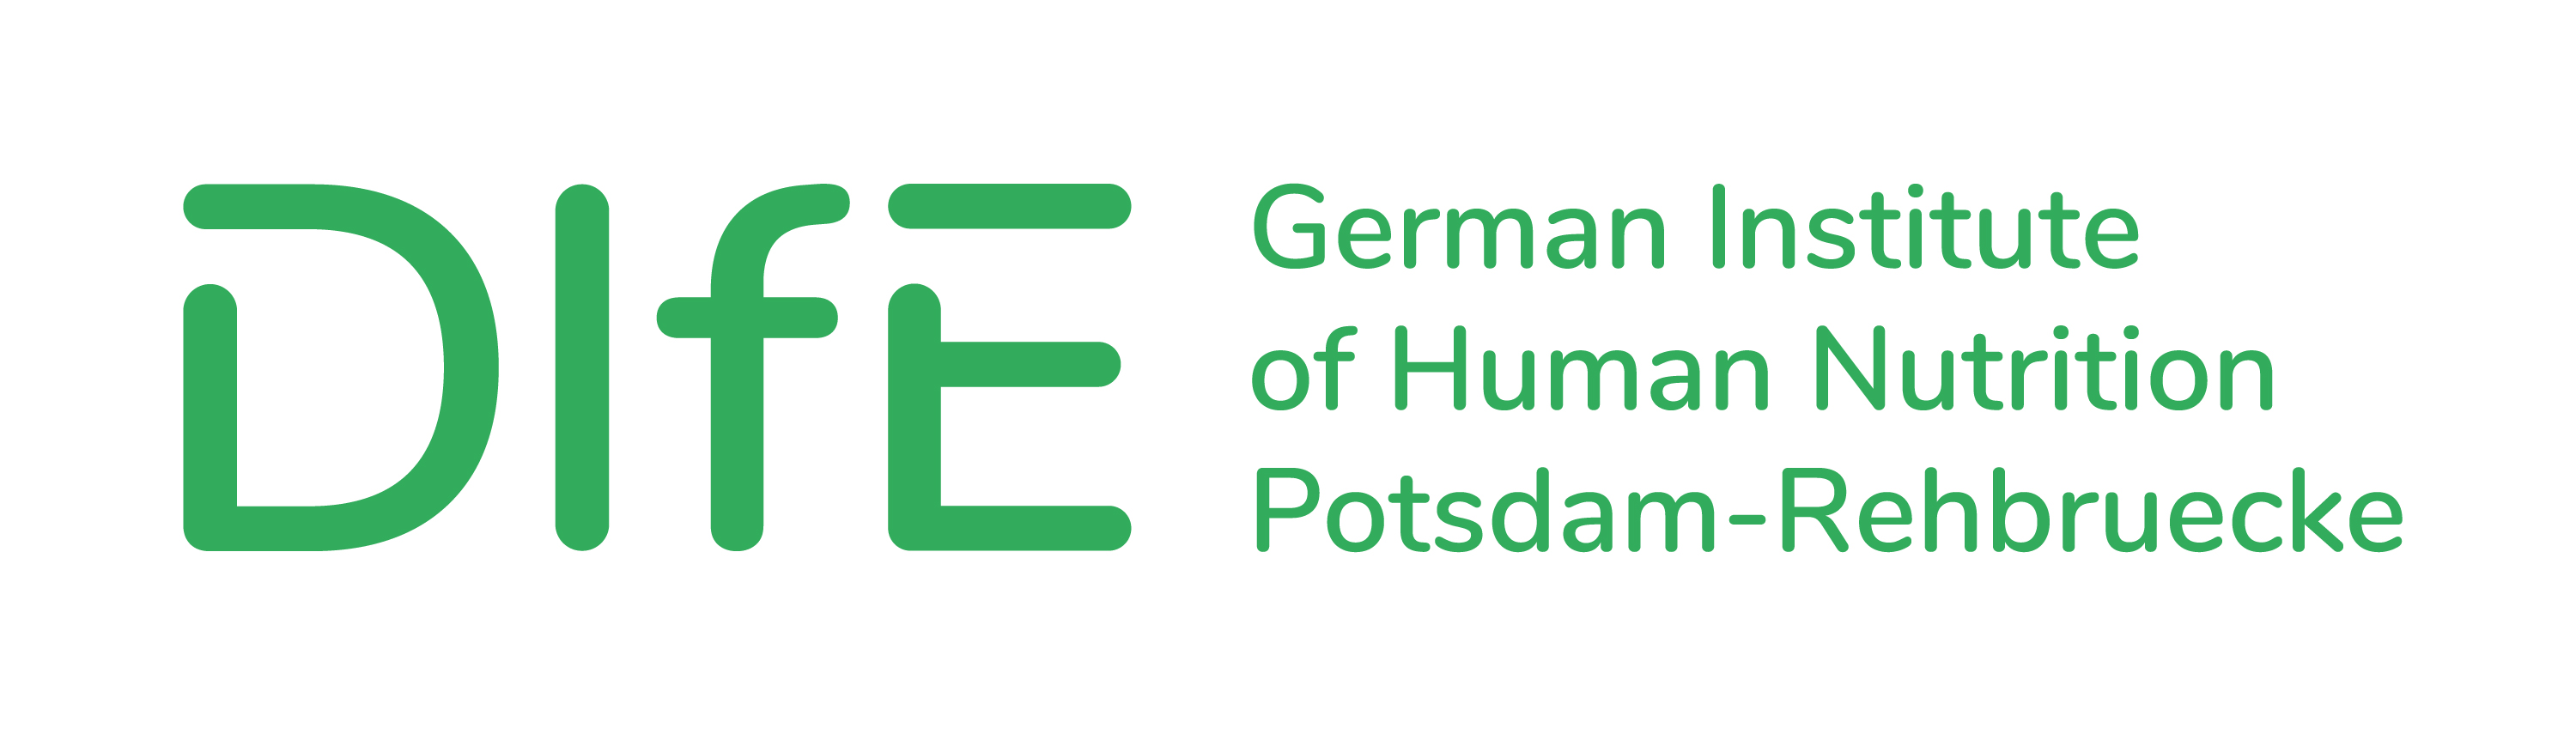 German Institute of Human Nutrition (DIfE)